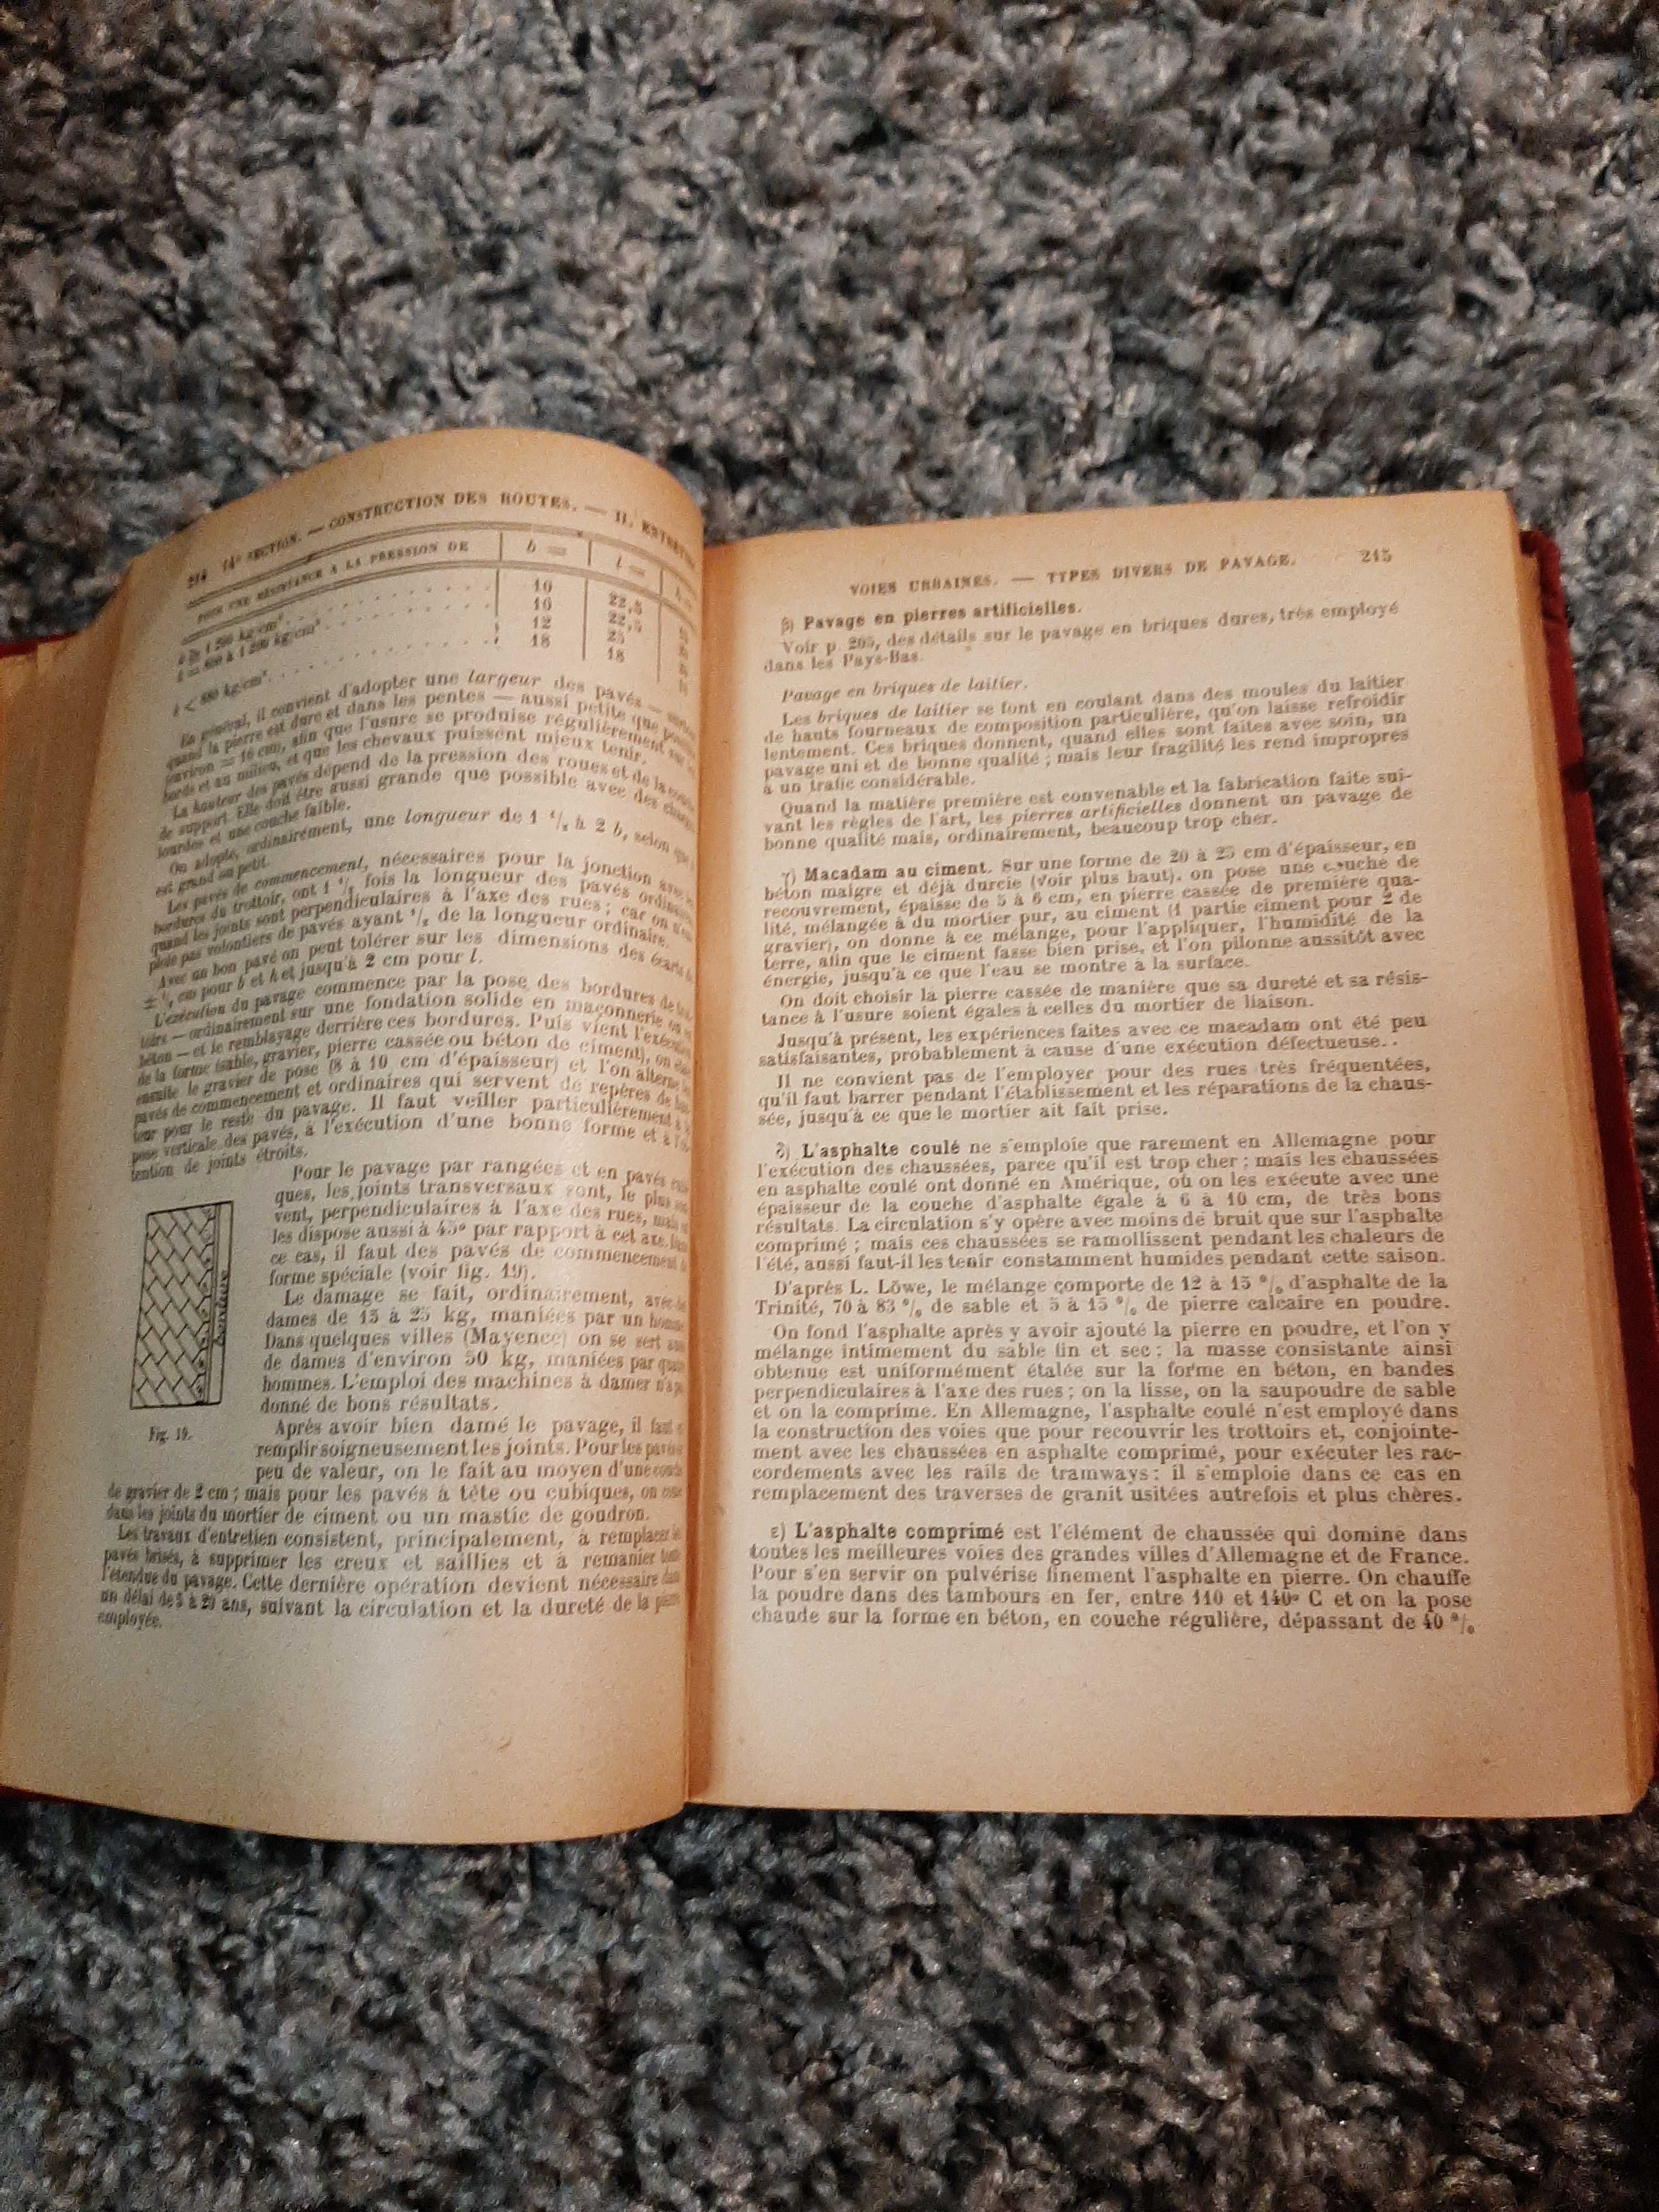 Hutte - Manual de L'Ingenieur (1920) Manualul Inginerului in franceza